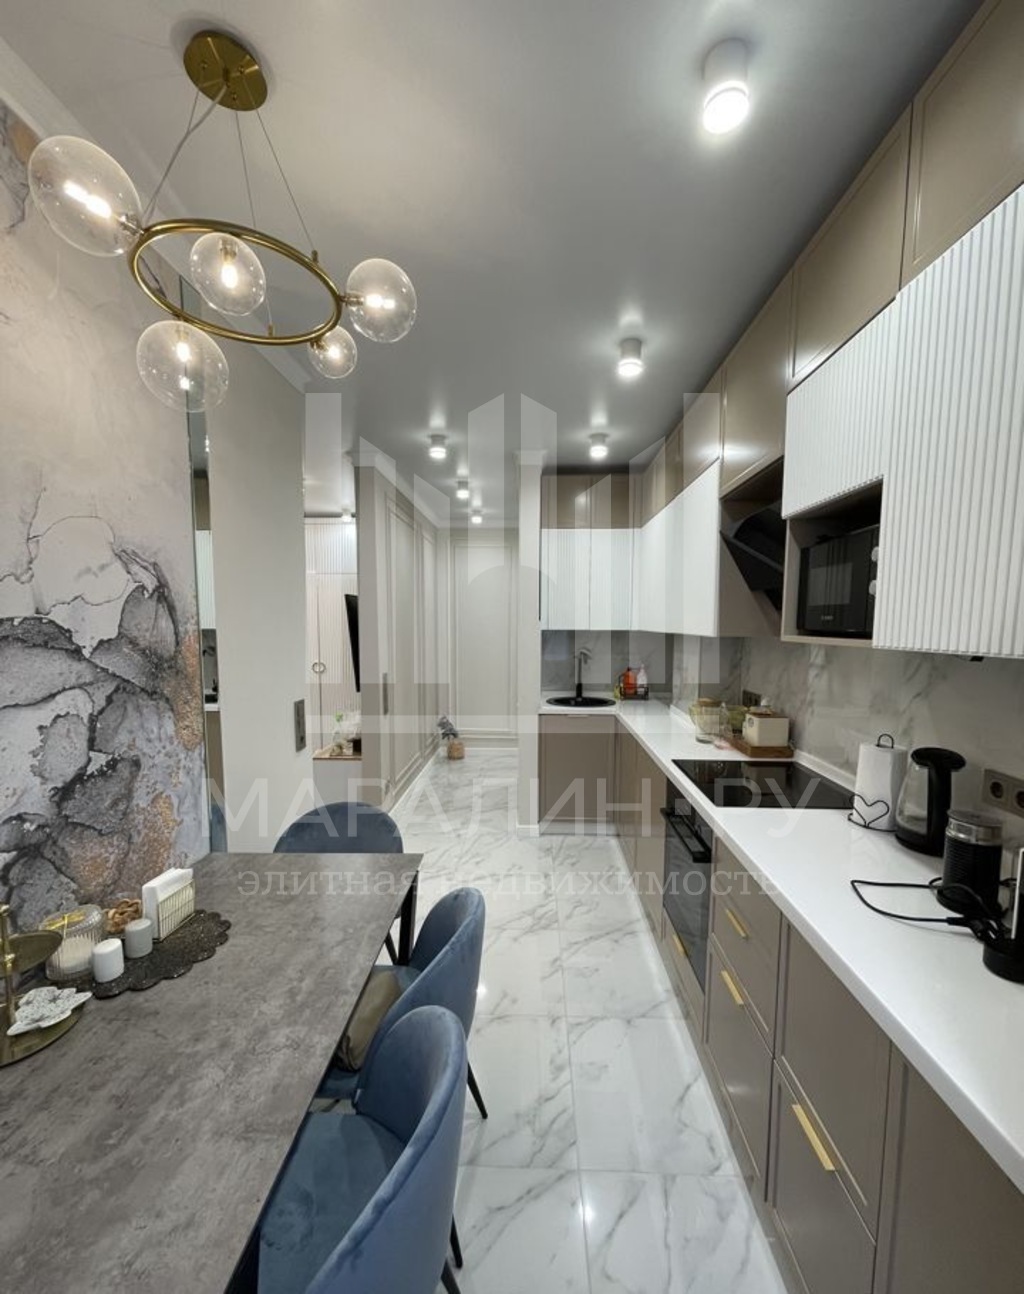 Apartment with design